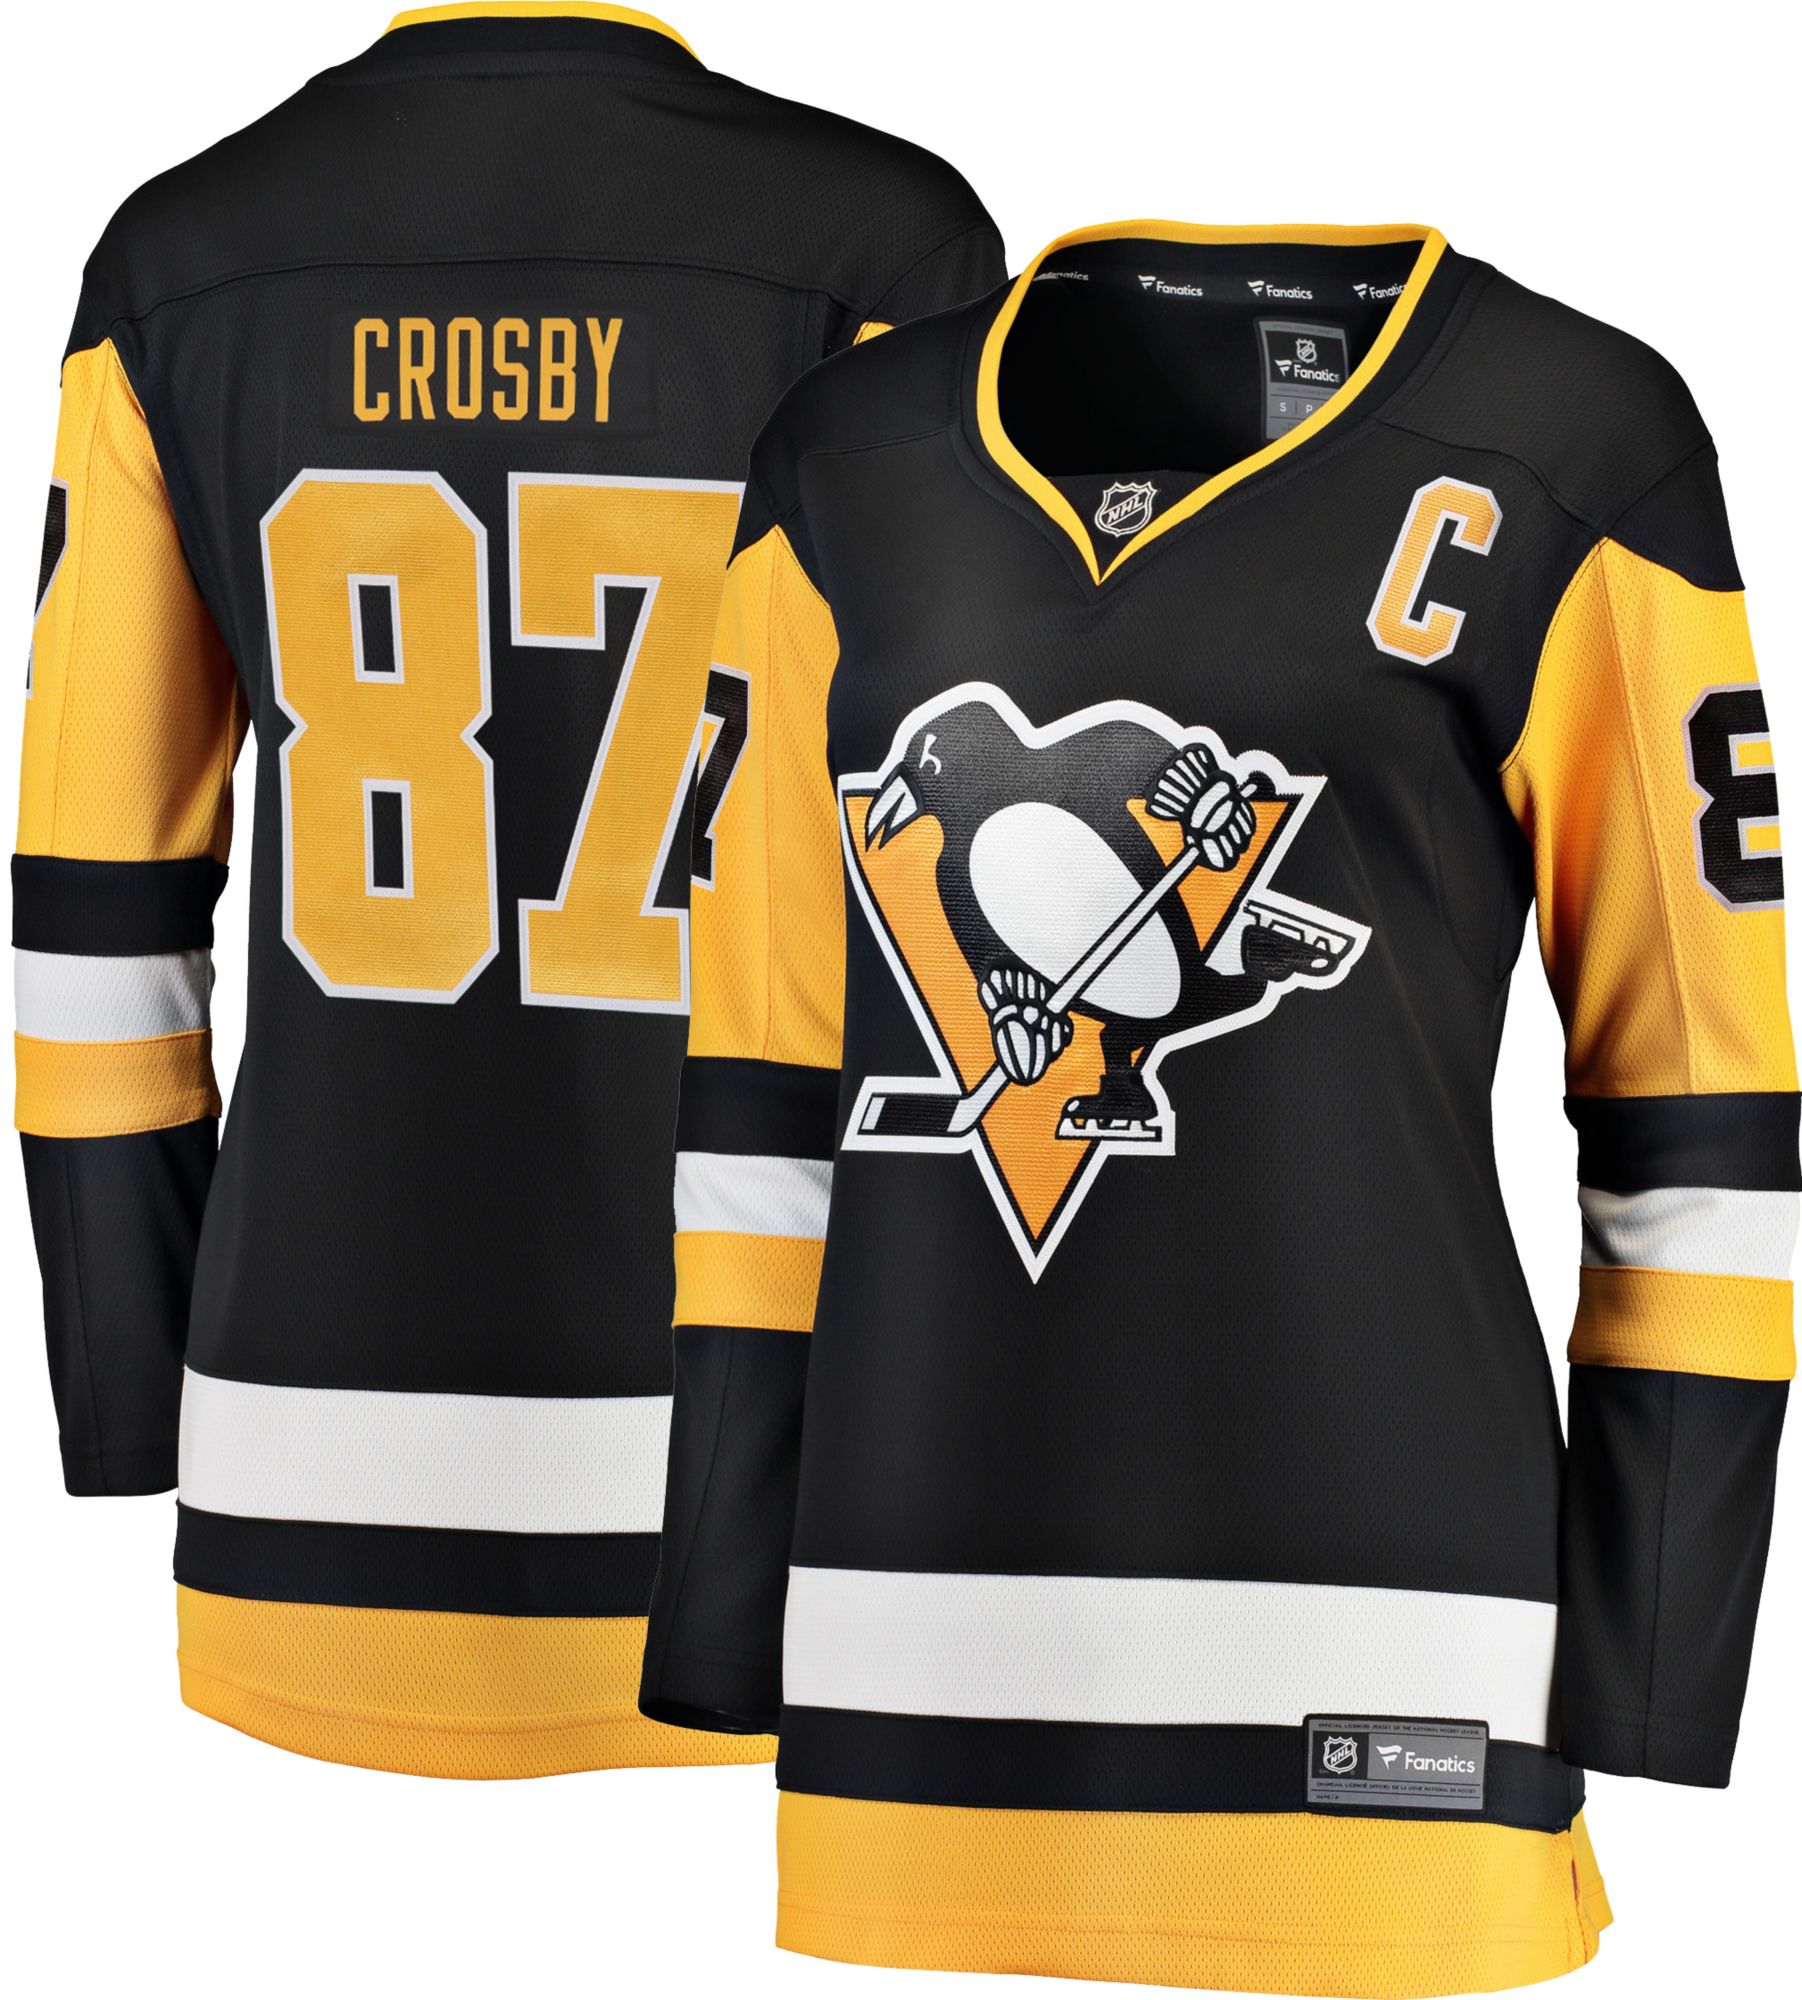 crosby jersey penguins